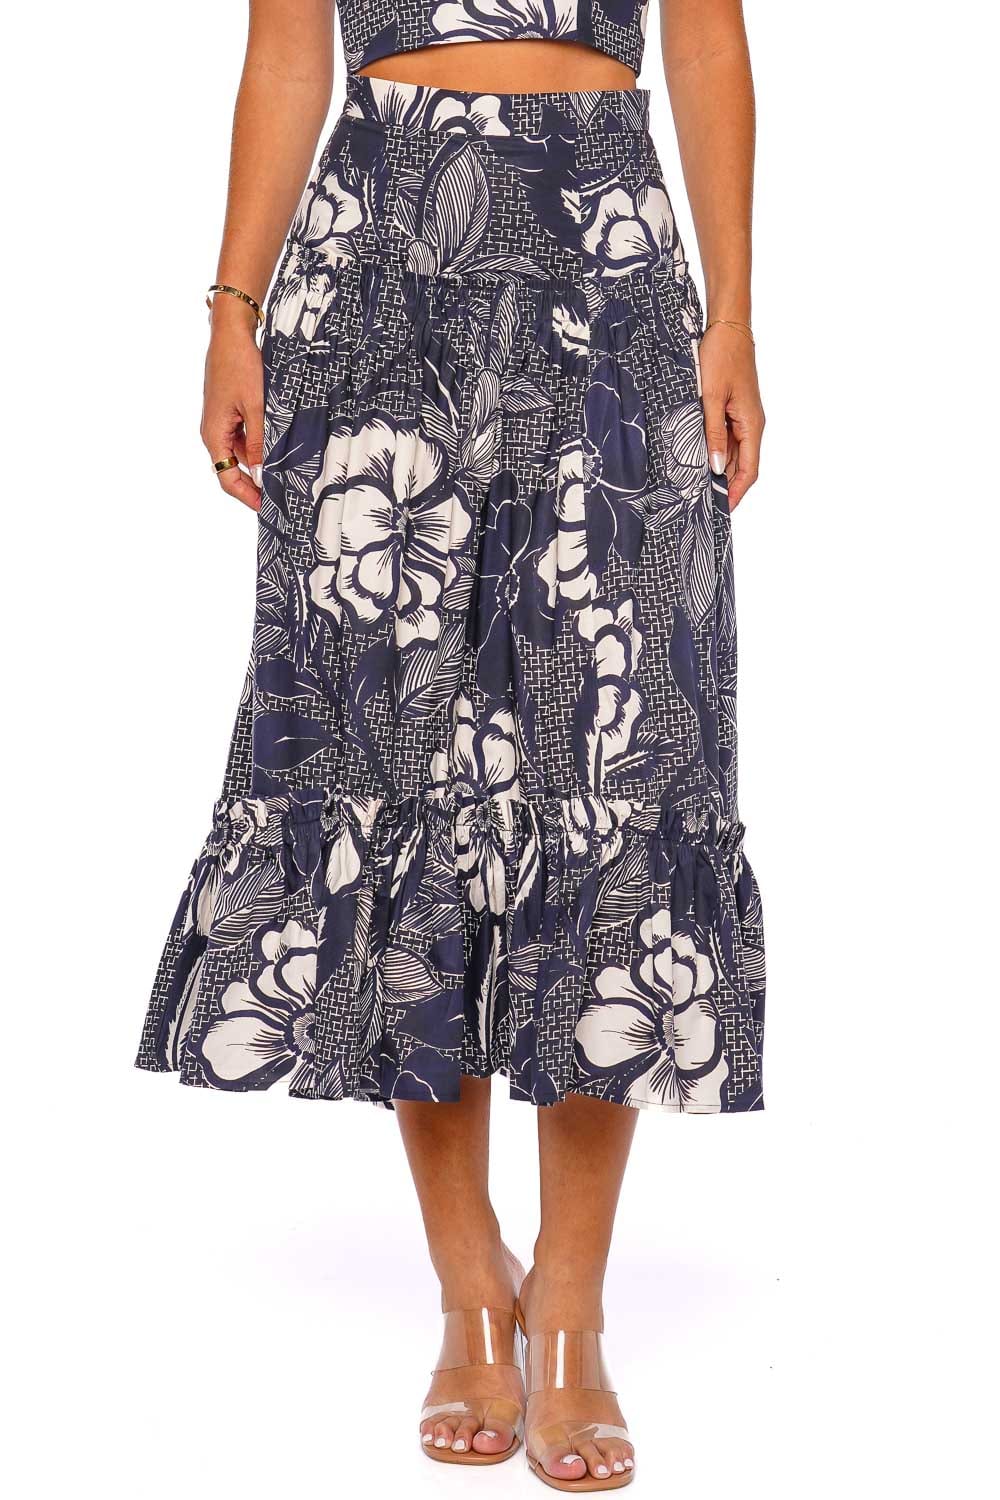 Cara Cara Tisbury Printed Cotton Midi Skirt